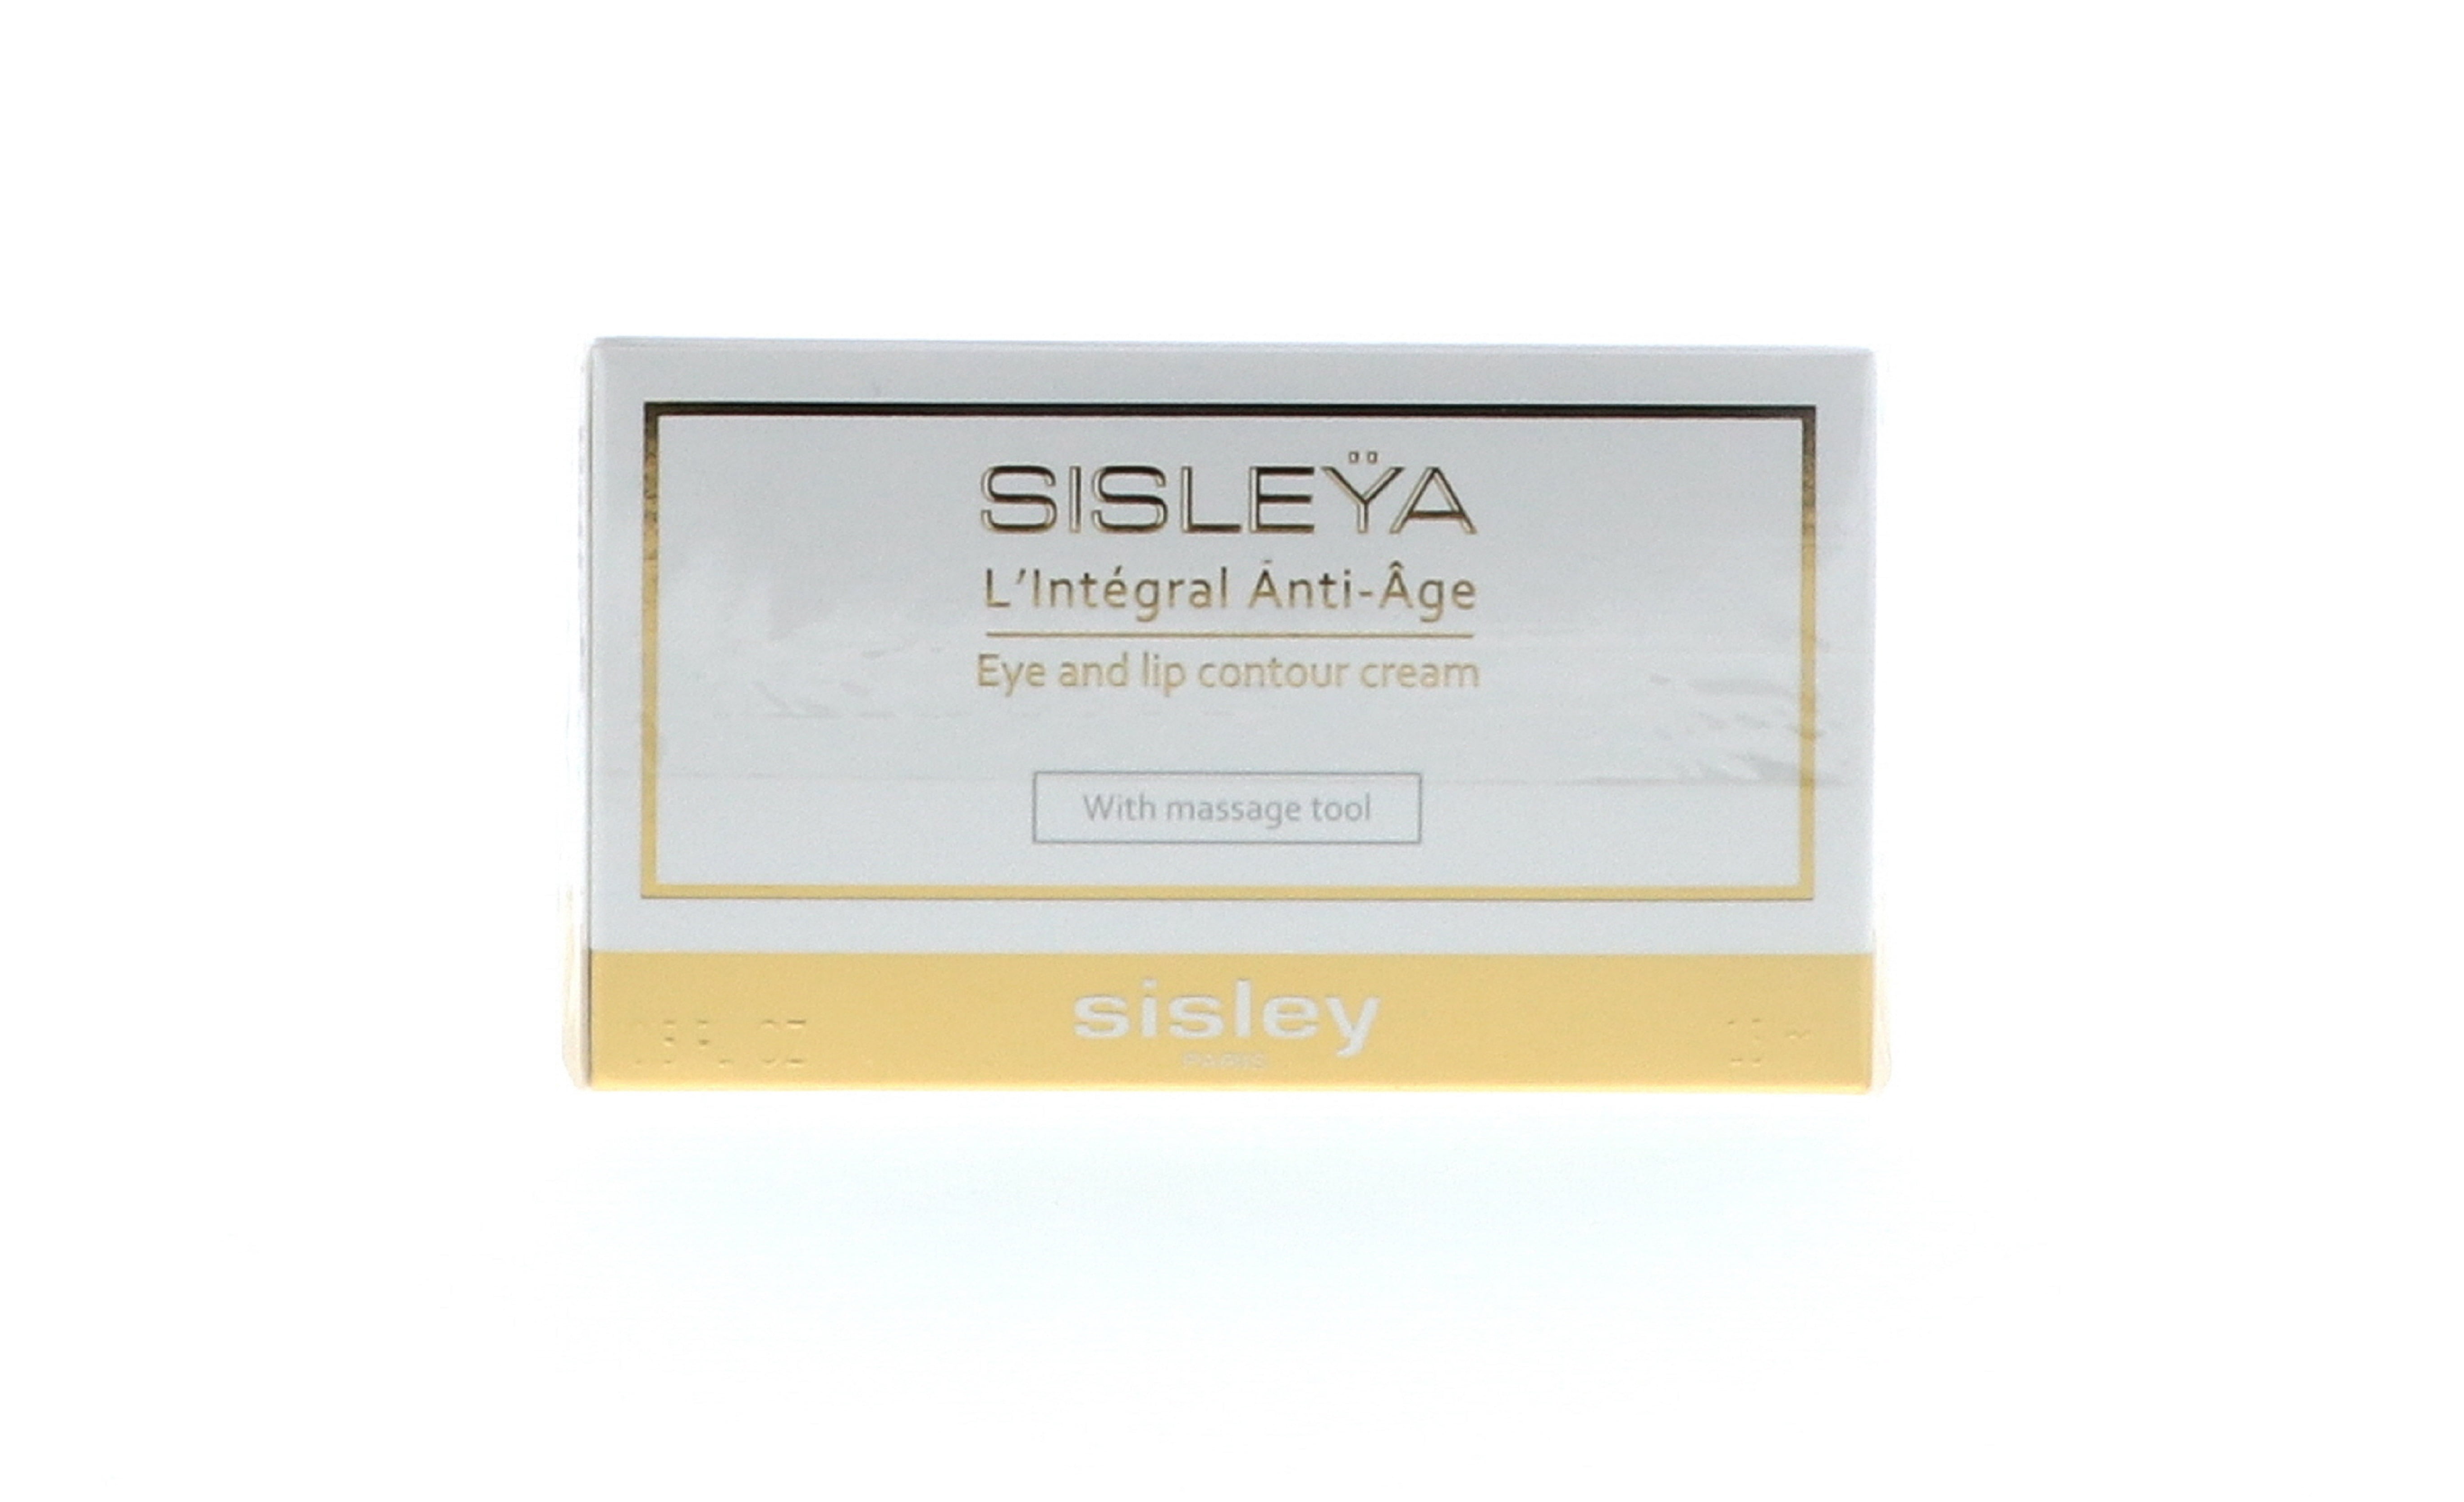 oz Sisleya L\'Integral 0.5 Anti-Age Cream, Eye and Contour Lip Sisley